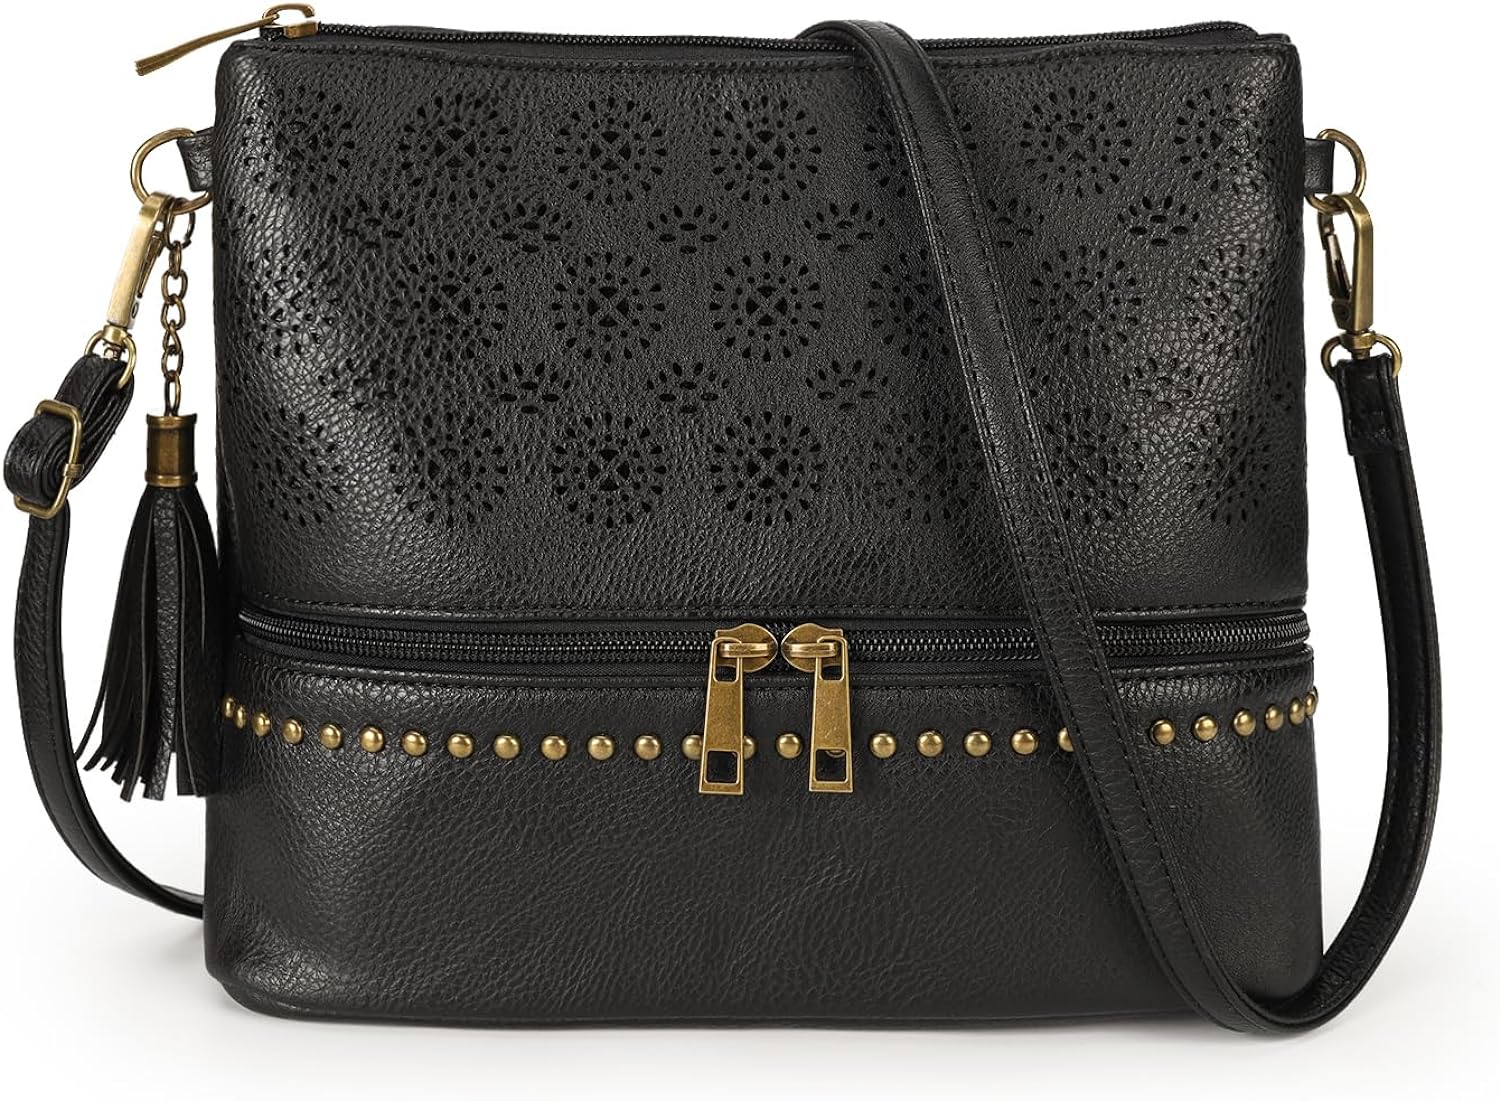 Luxury handbags fee changes for eBay.com - ChannelX